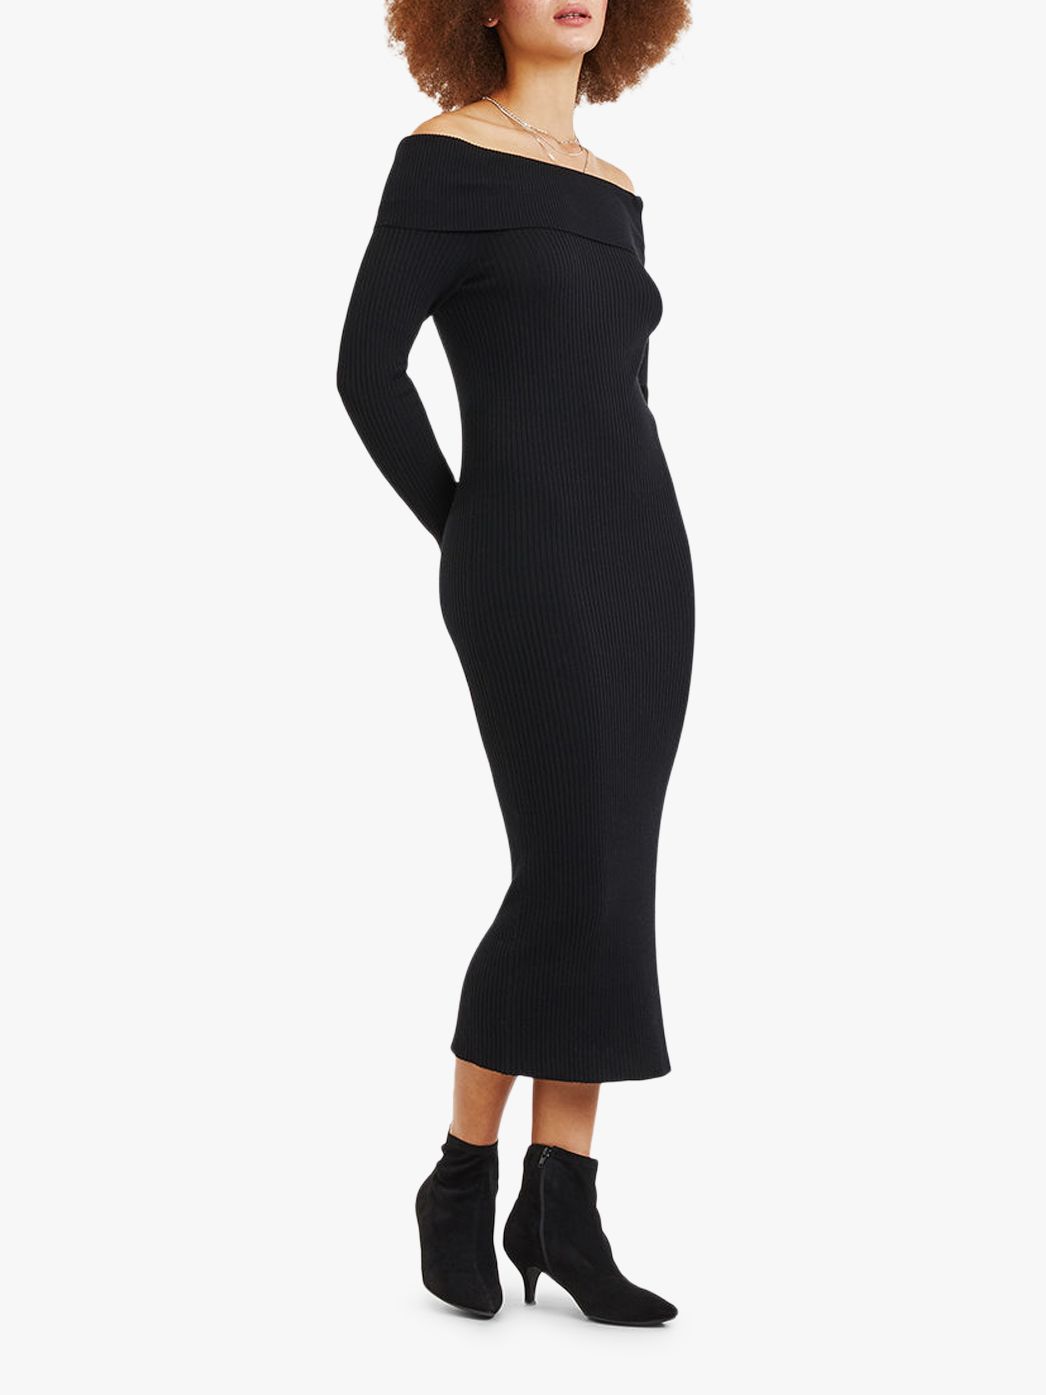 Oasis Cleo Bardot Knit Dress, Black at John Lewis & Partners